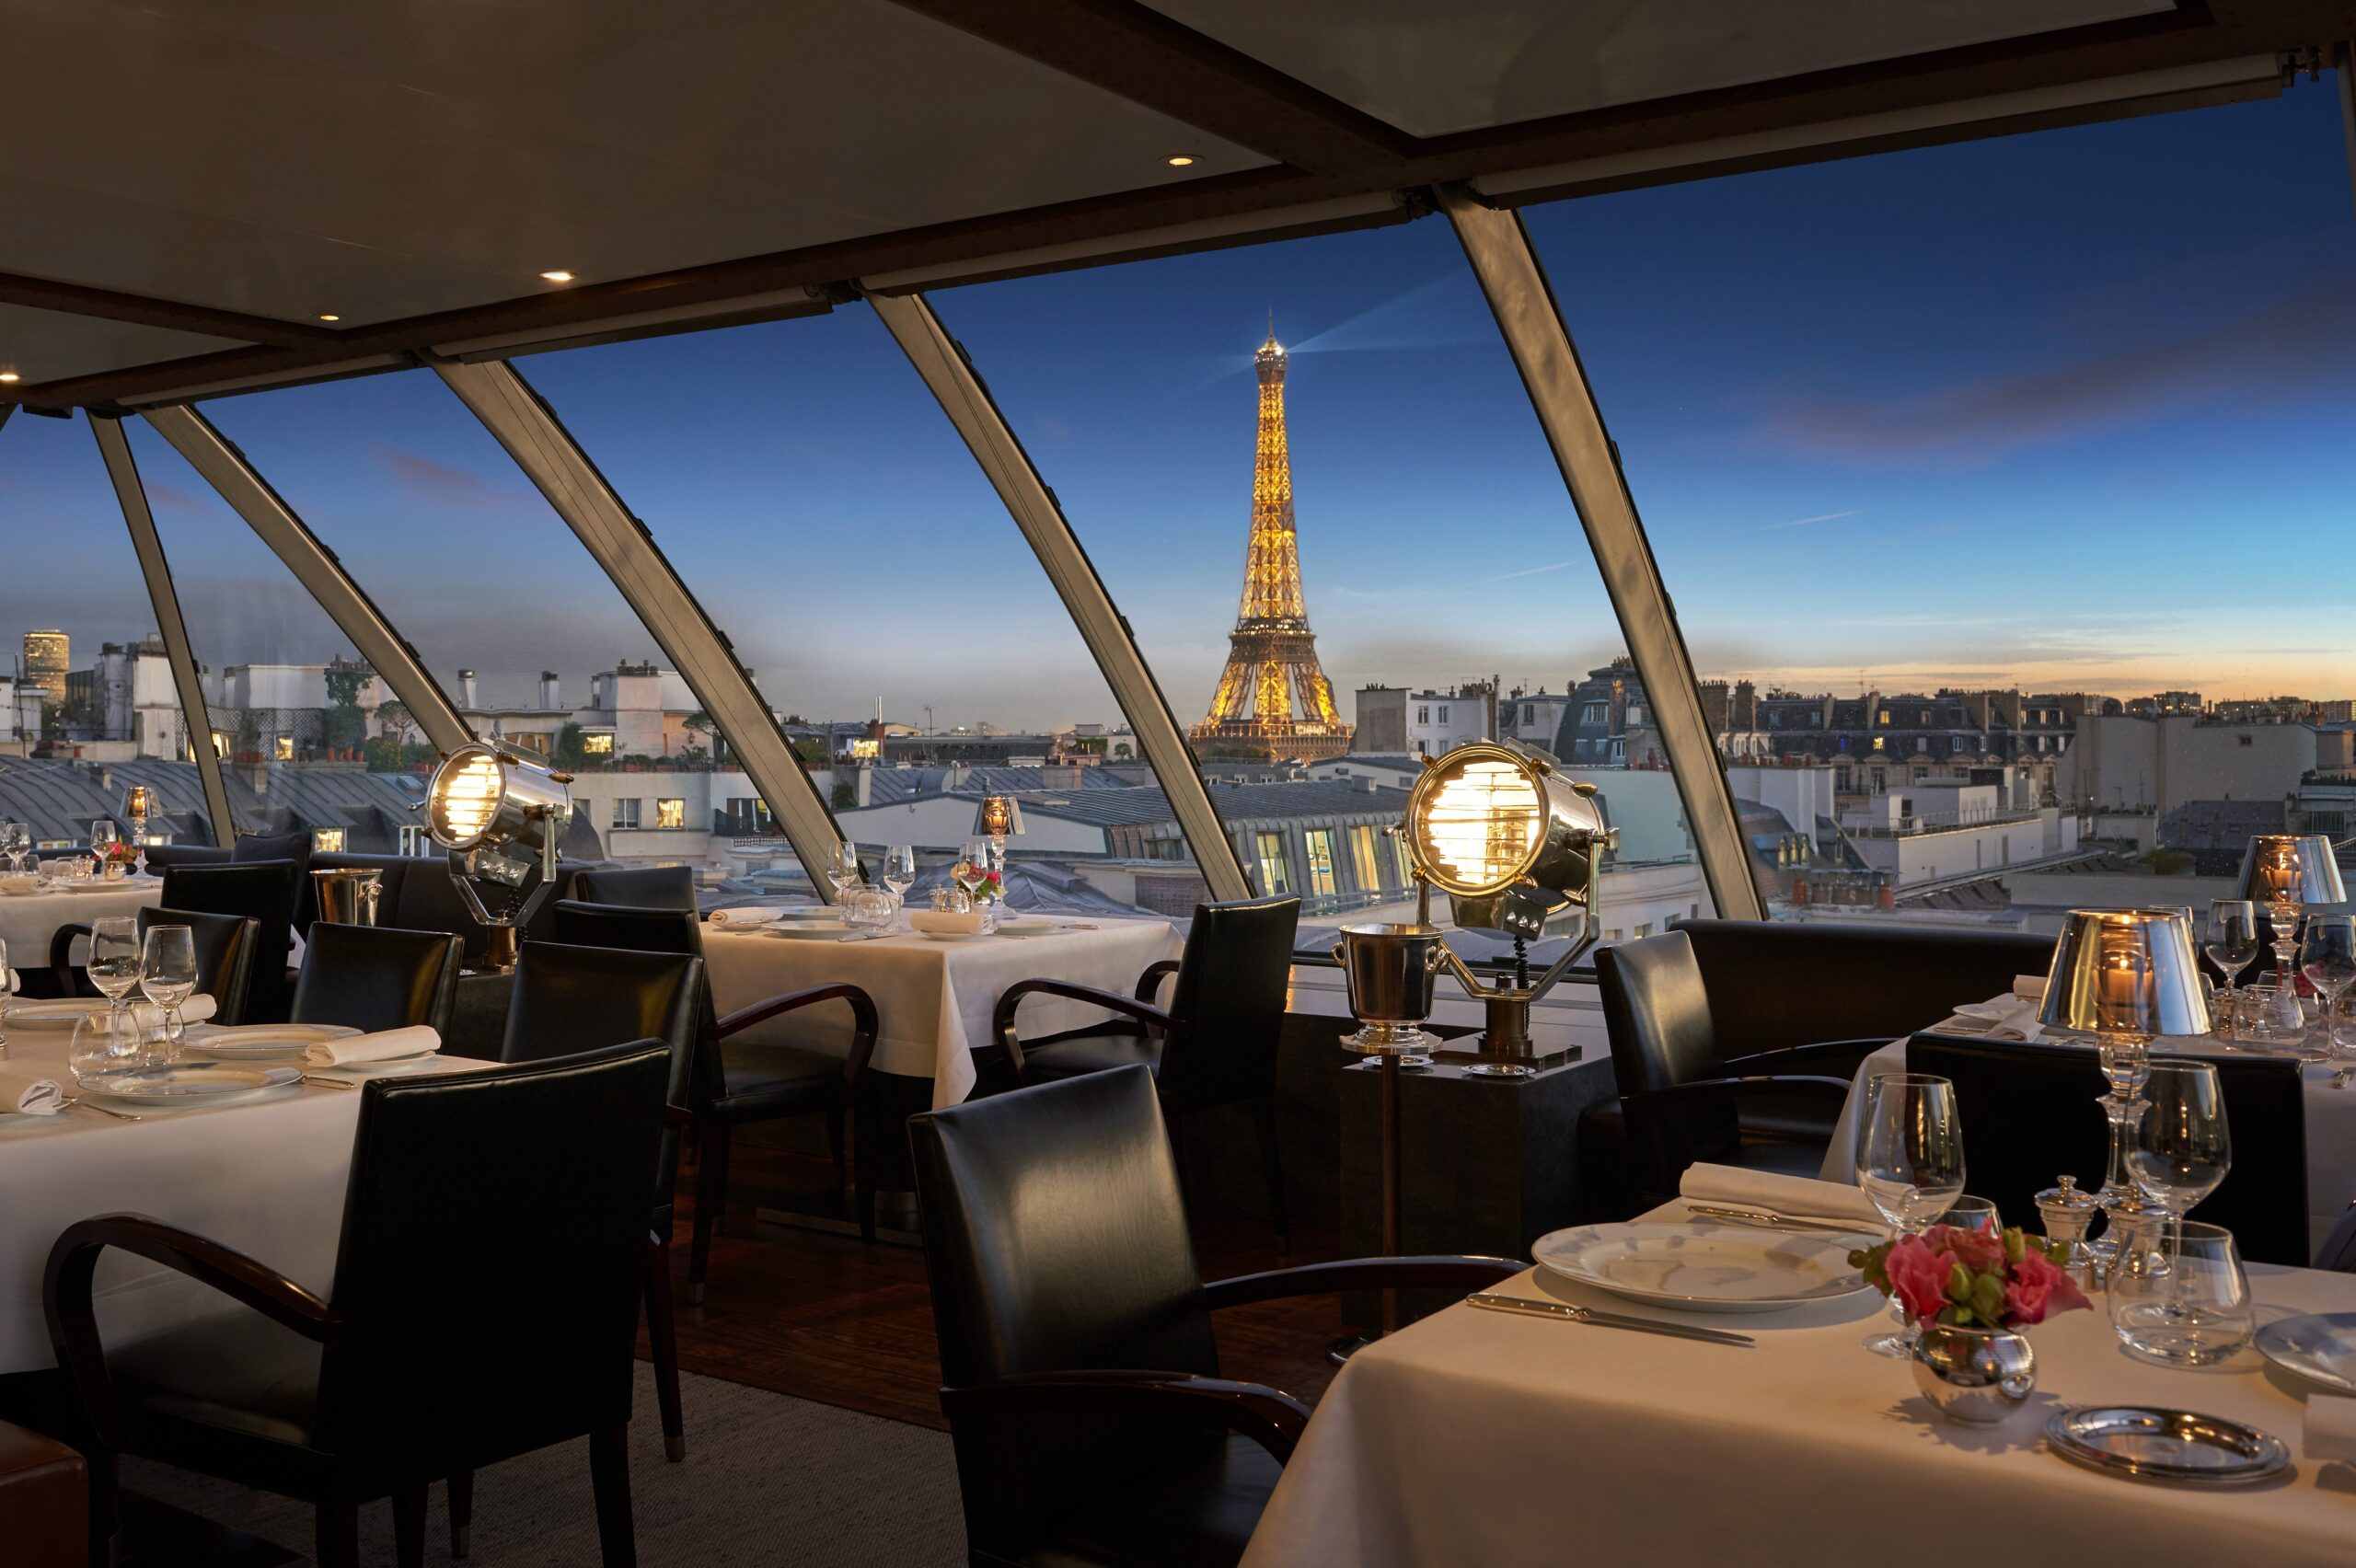 L'Oiseau Blanc - Paris Rooftop Restaurant with Eiffel Tower Views